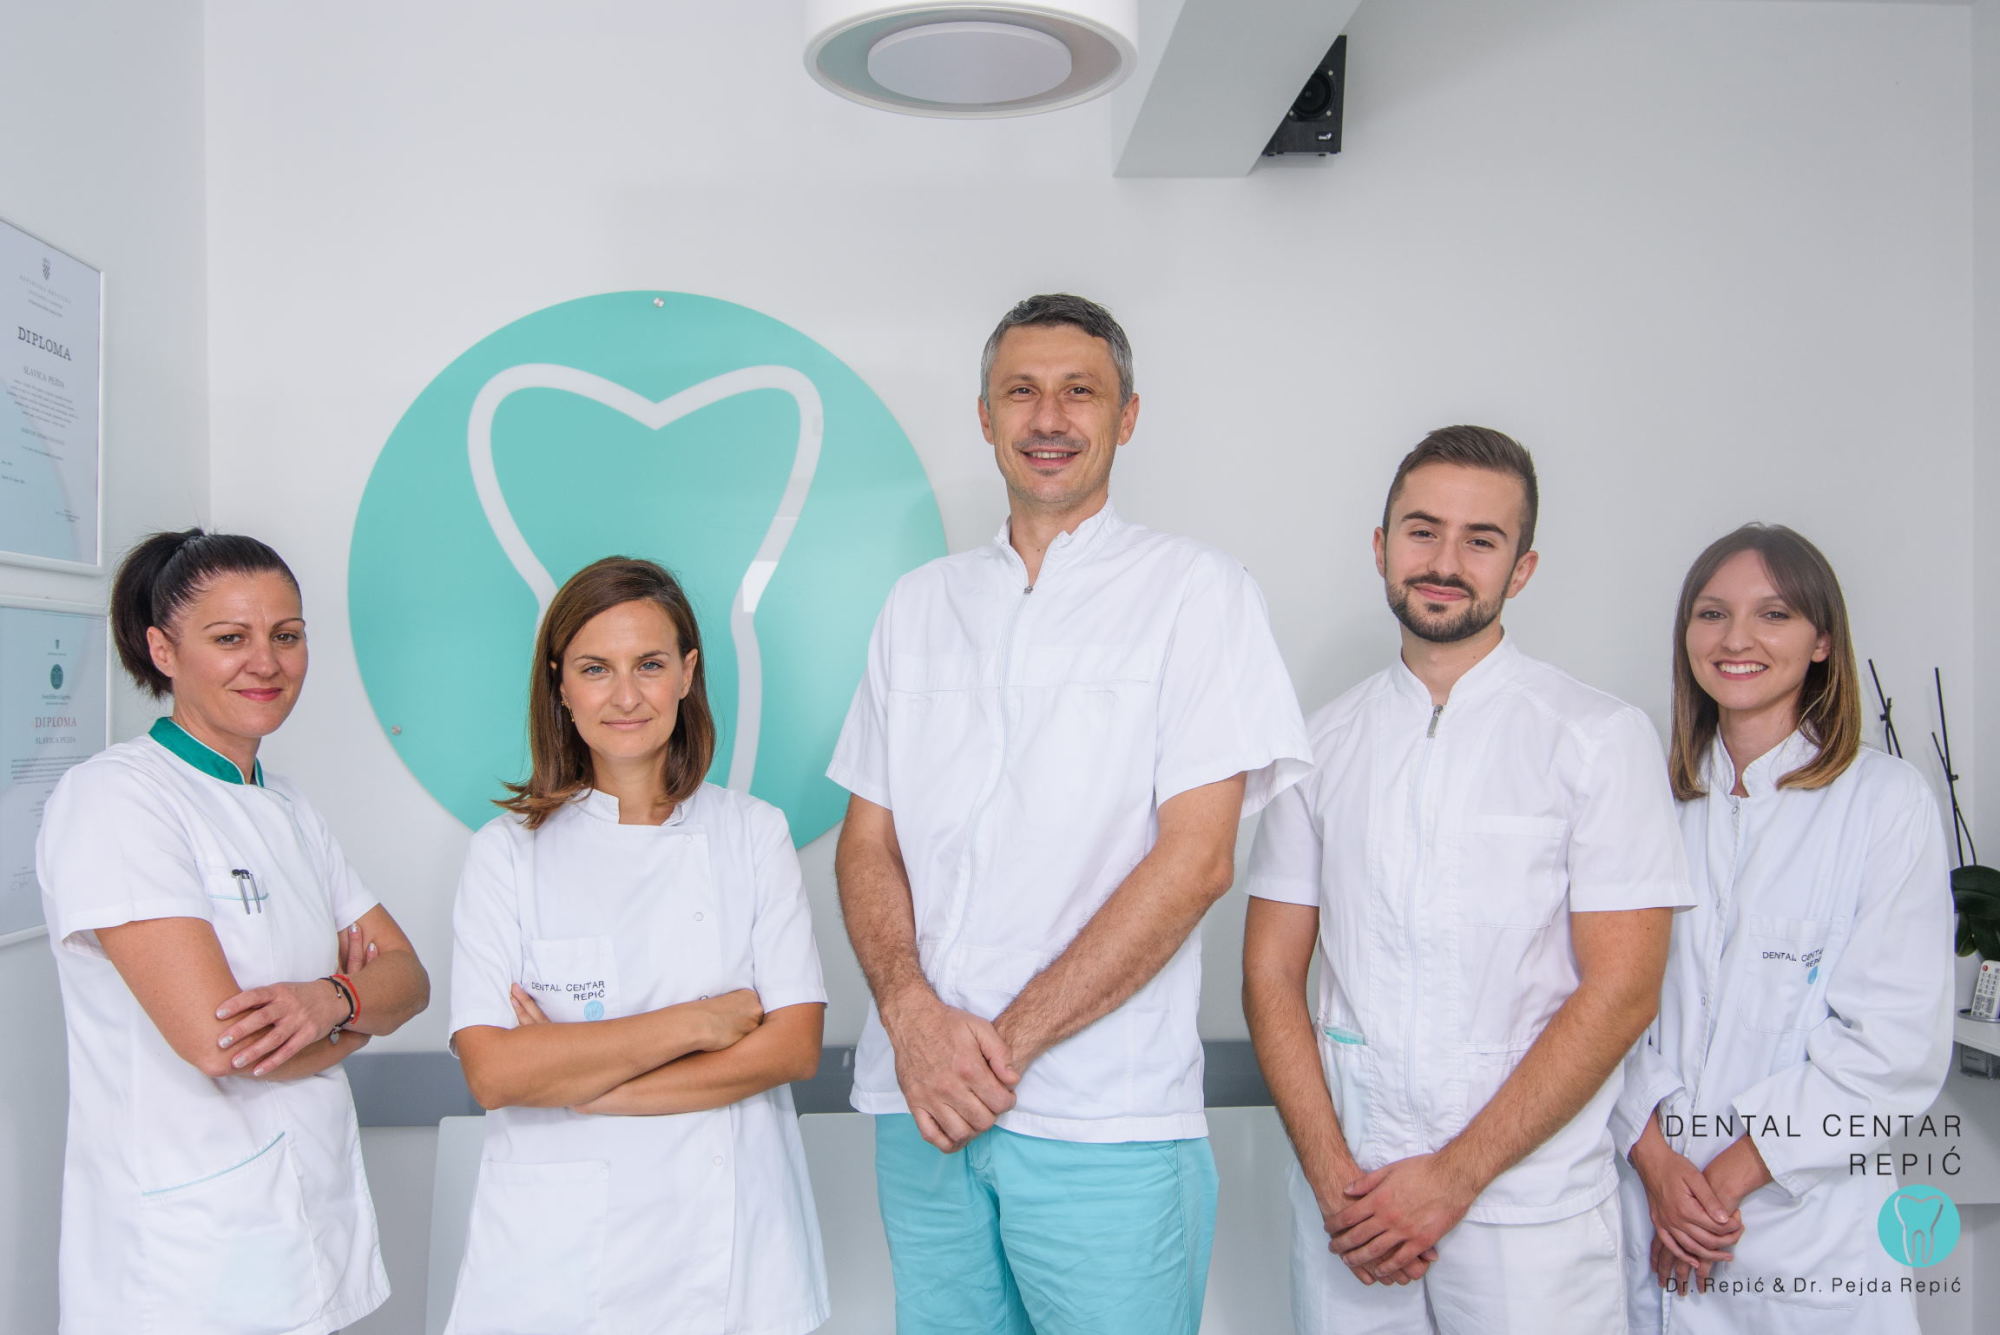 Dental Center Repic Team Picture